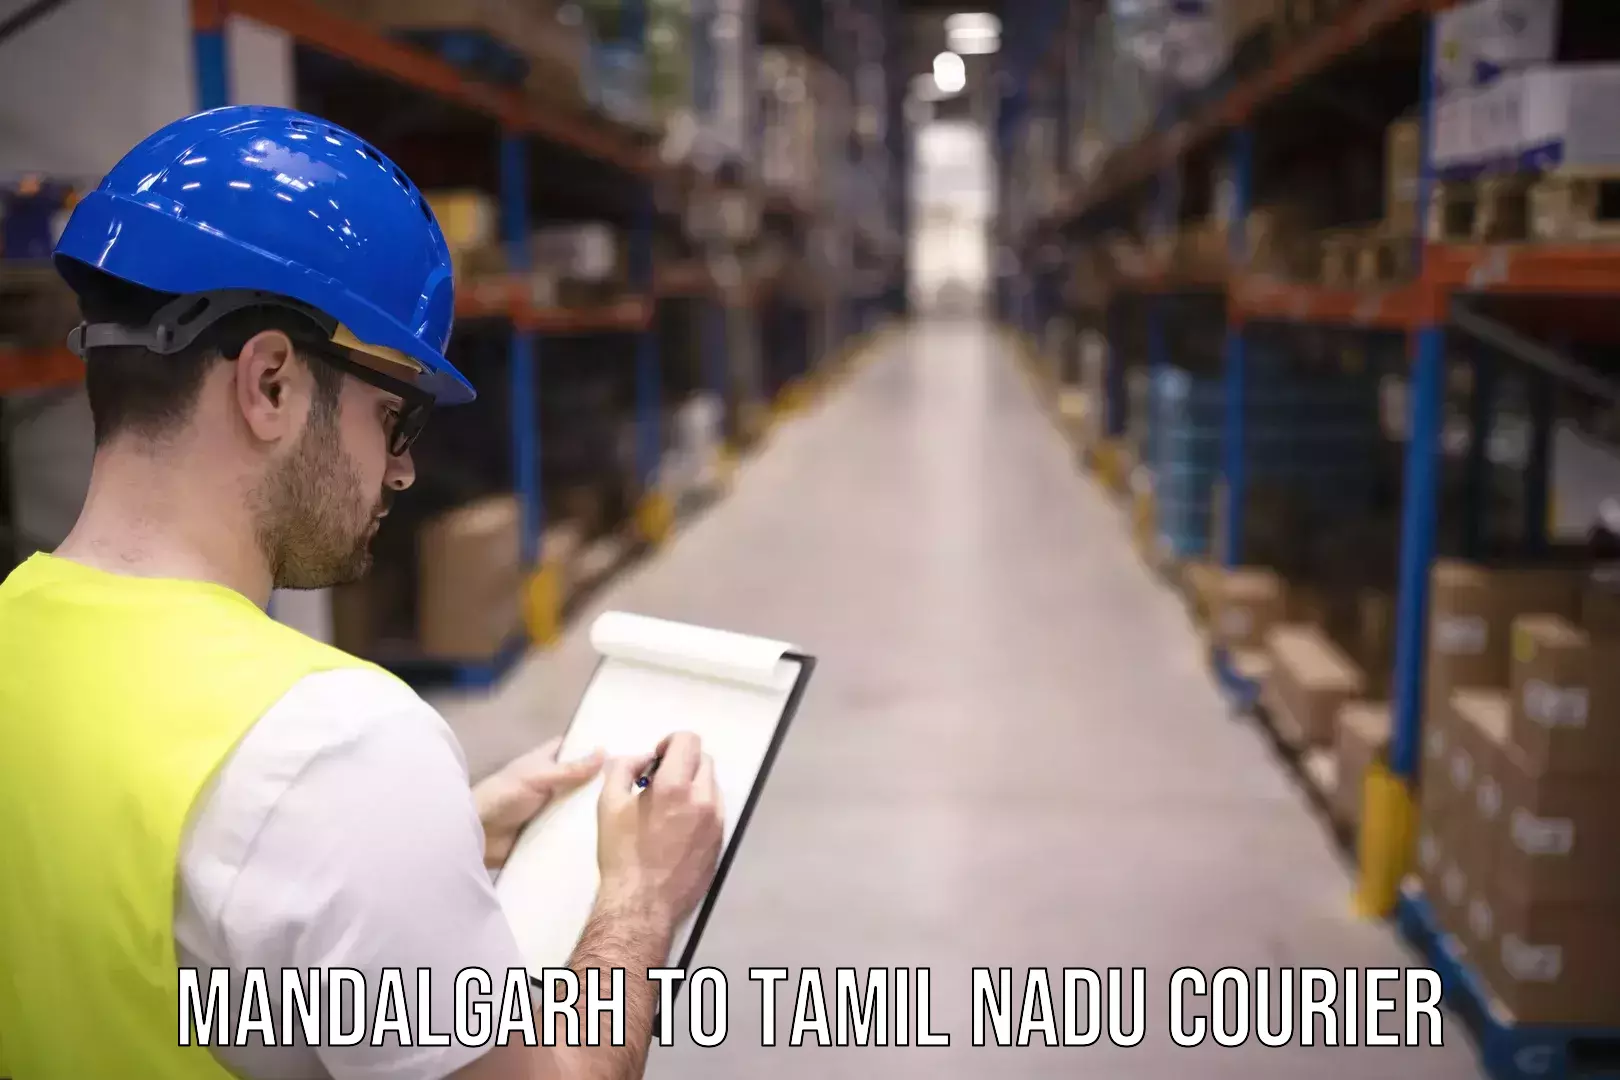 Courier service comparison Mandalgarh to Tamil Nadu